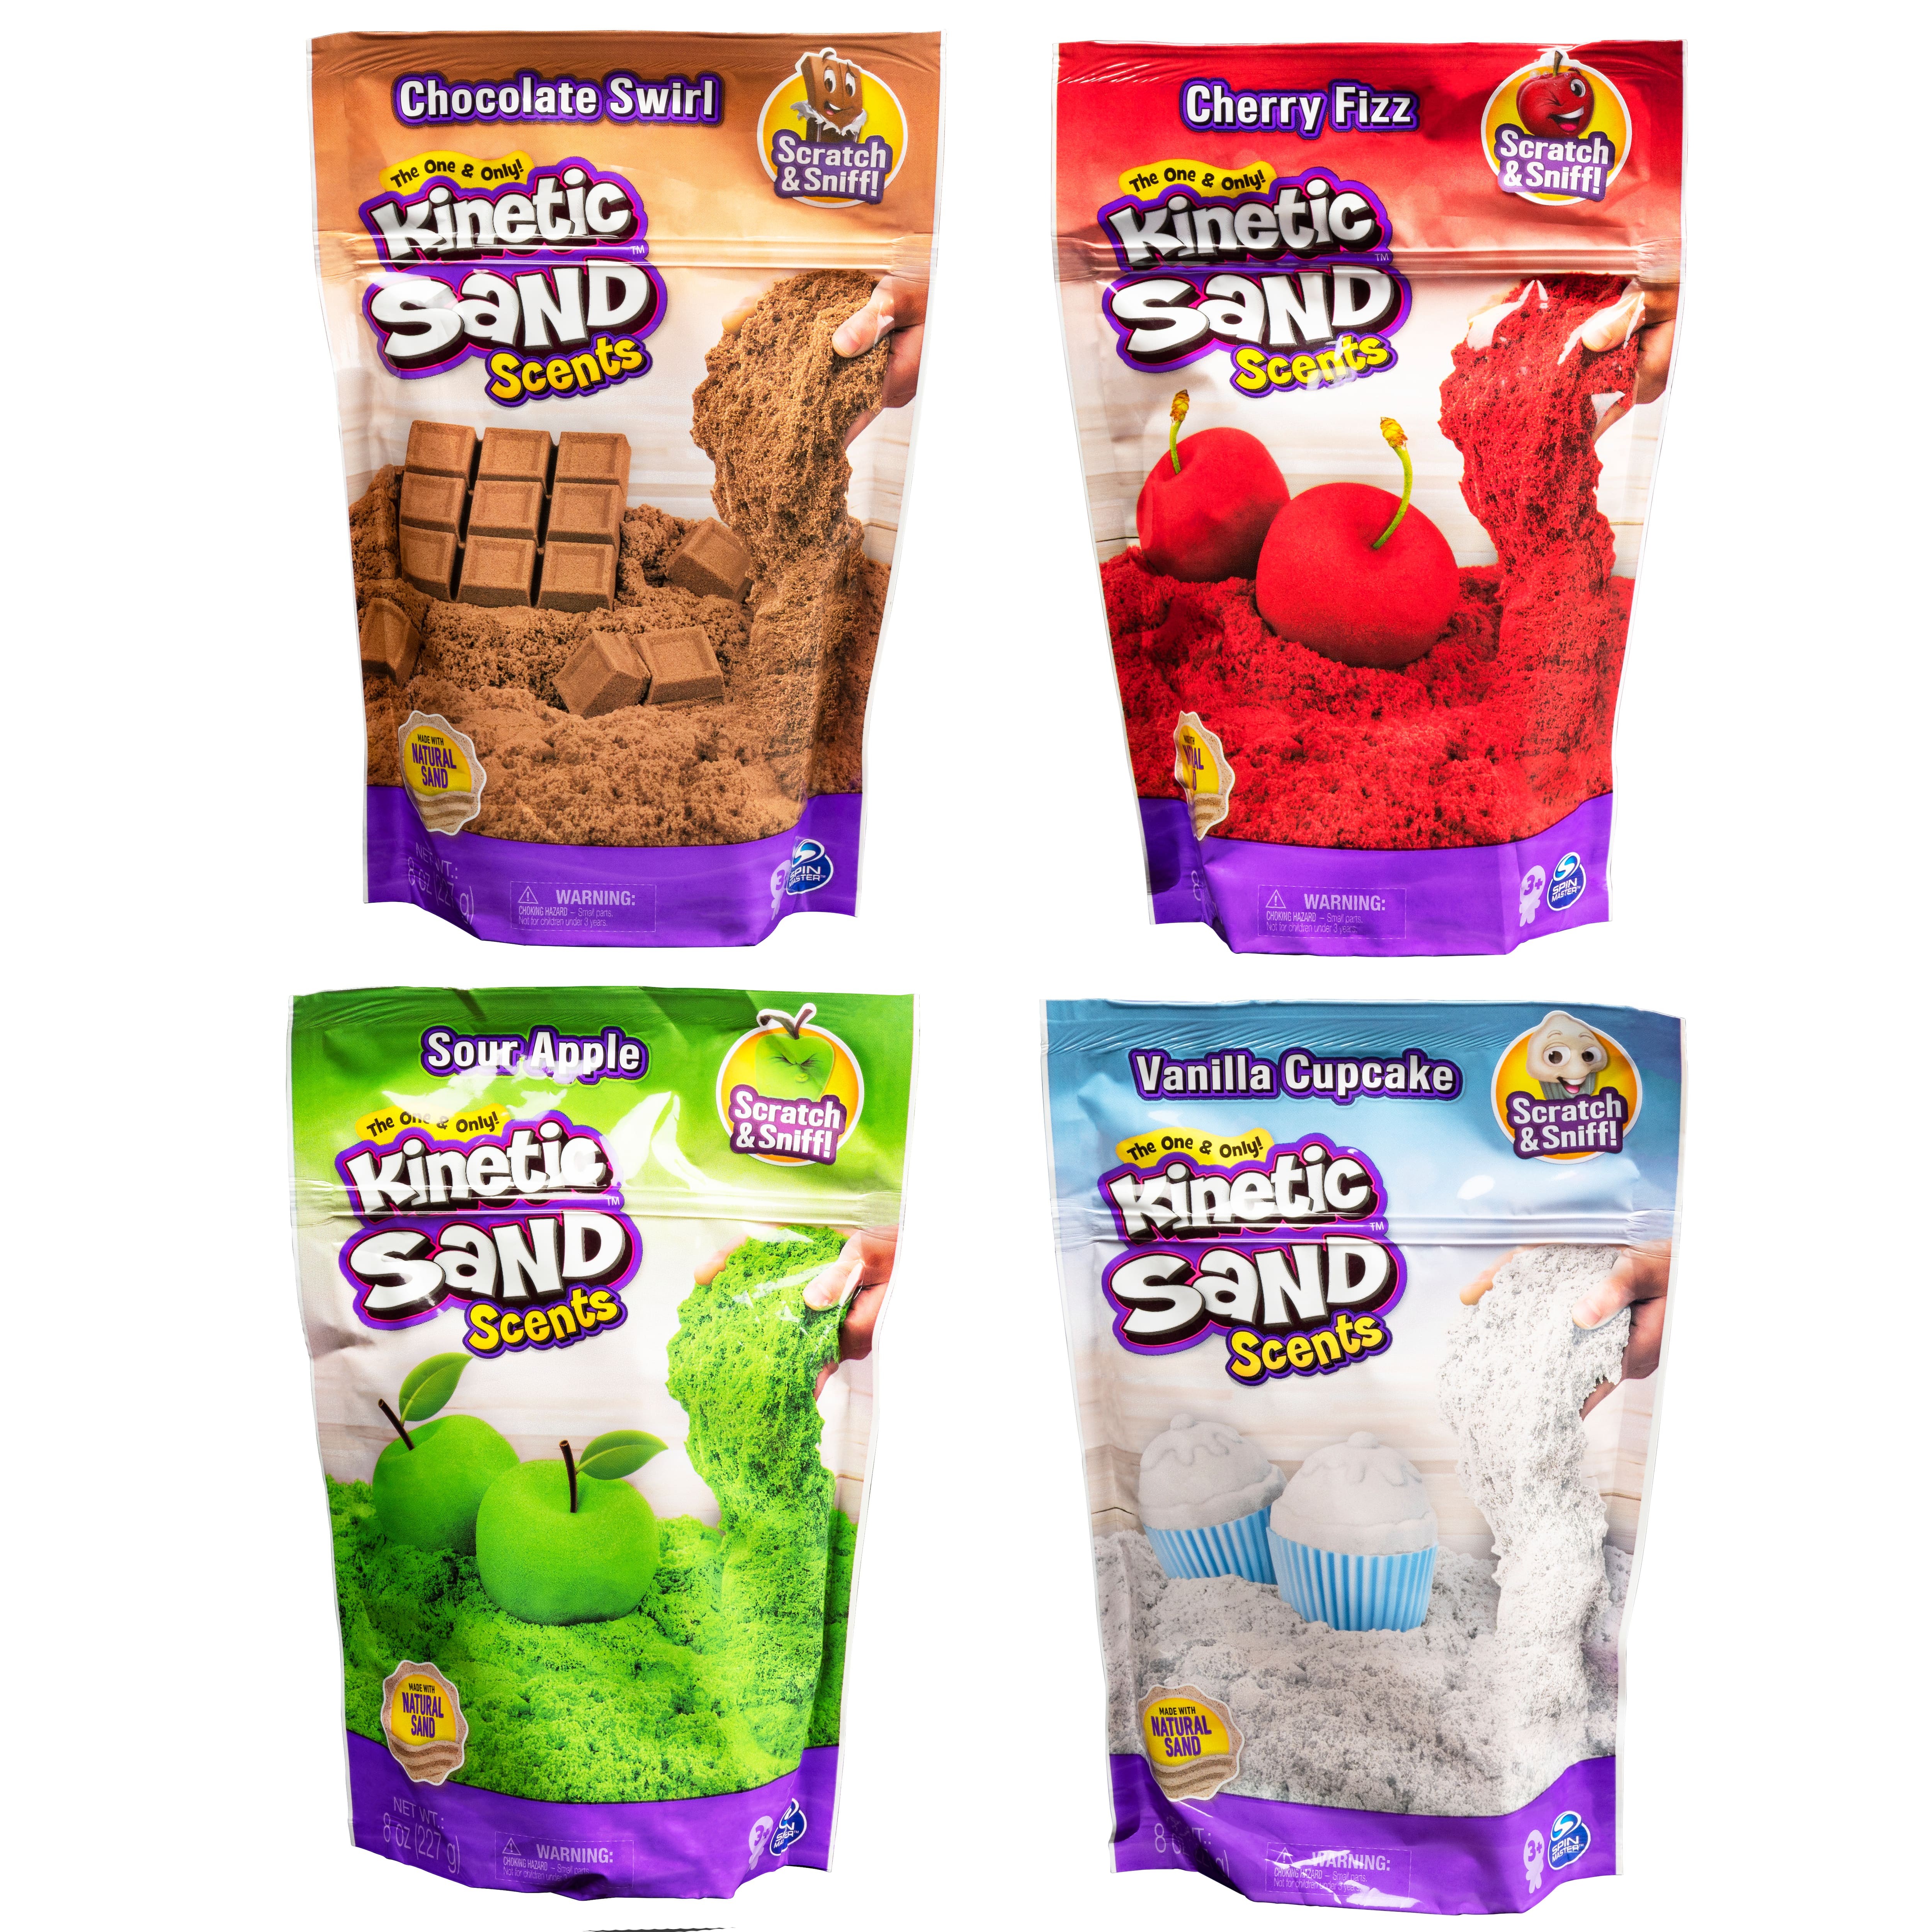 Kinetic Sand Scents, 226g Chocolate Swirl Scented Kinetic Sand